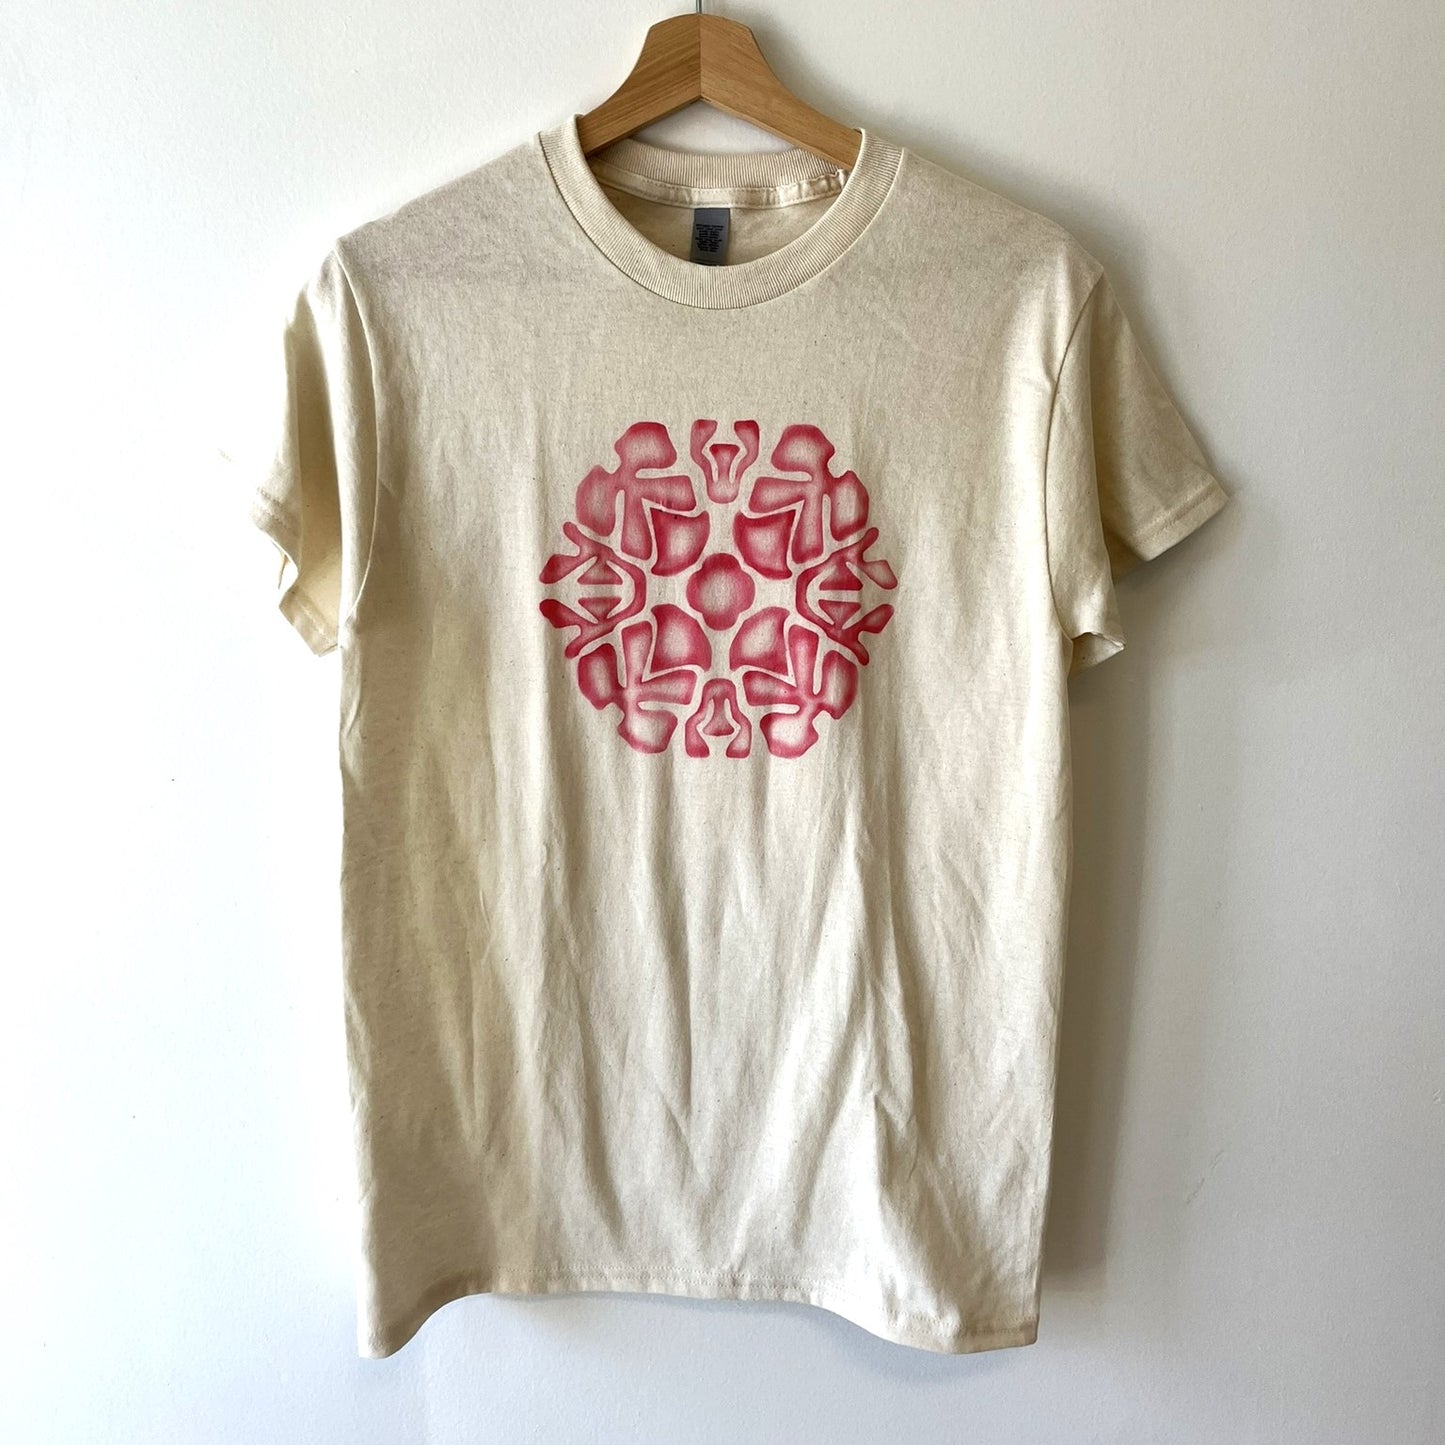 David House T-Shirt - Pink on White